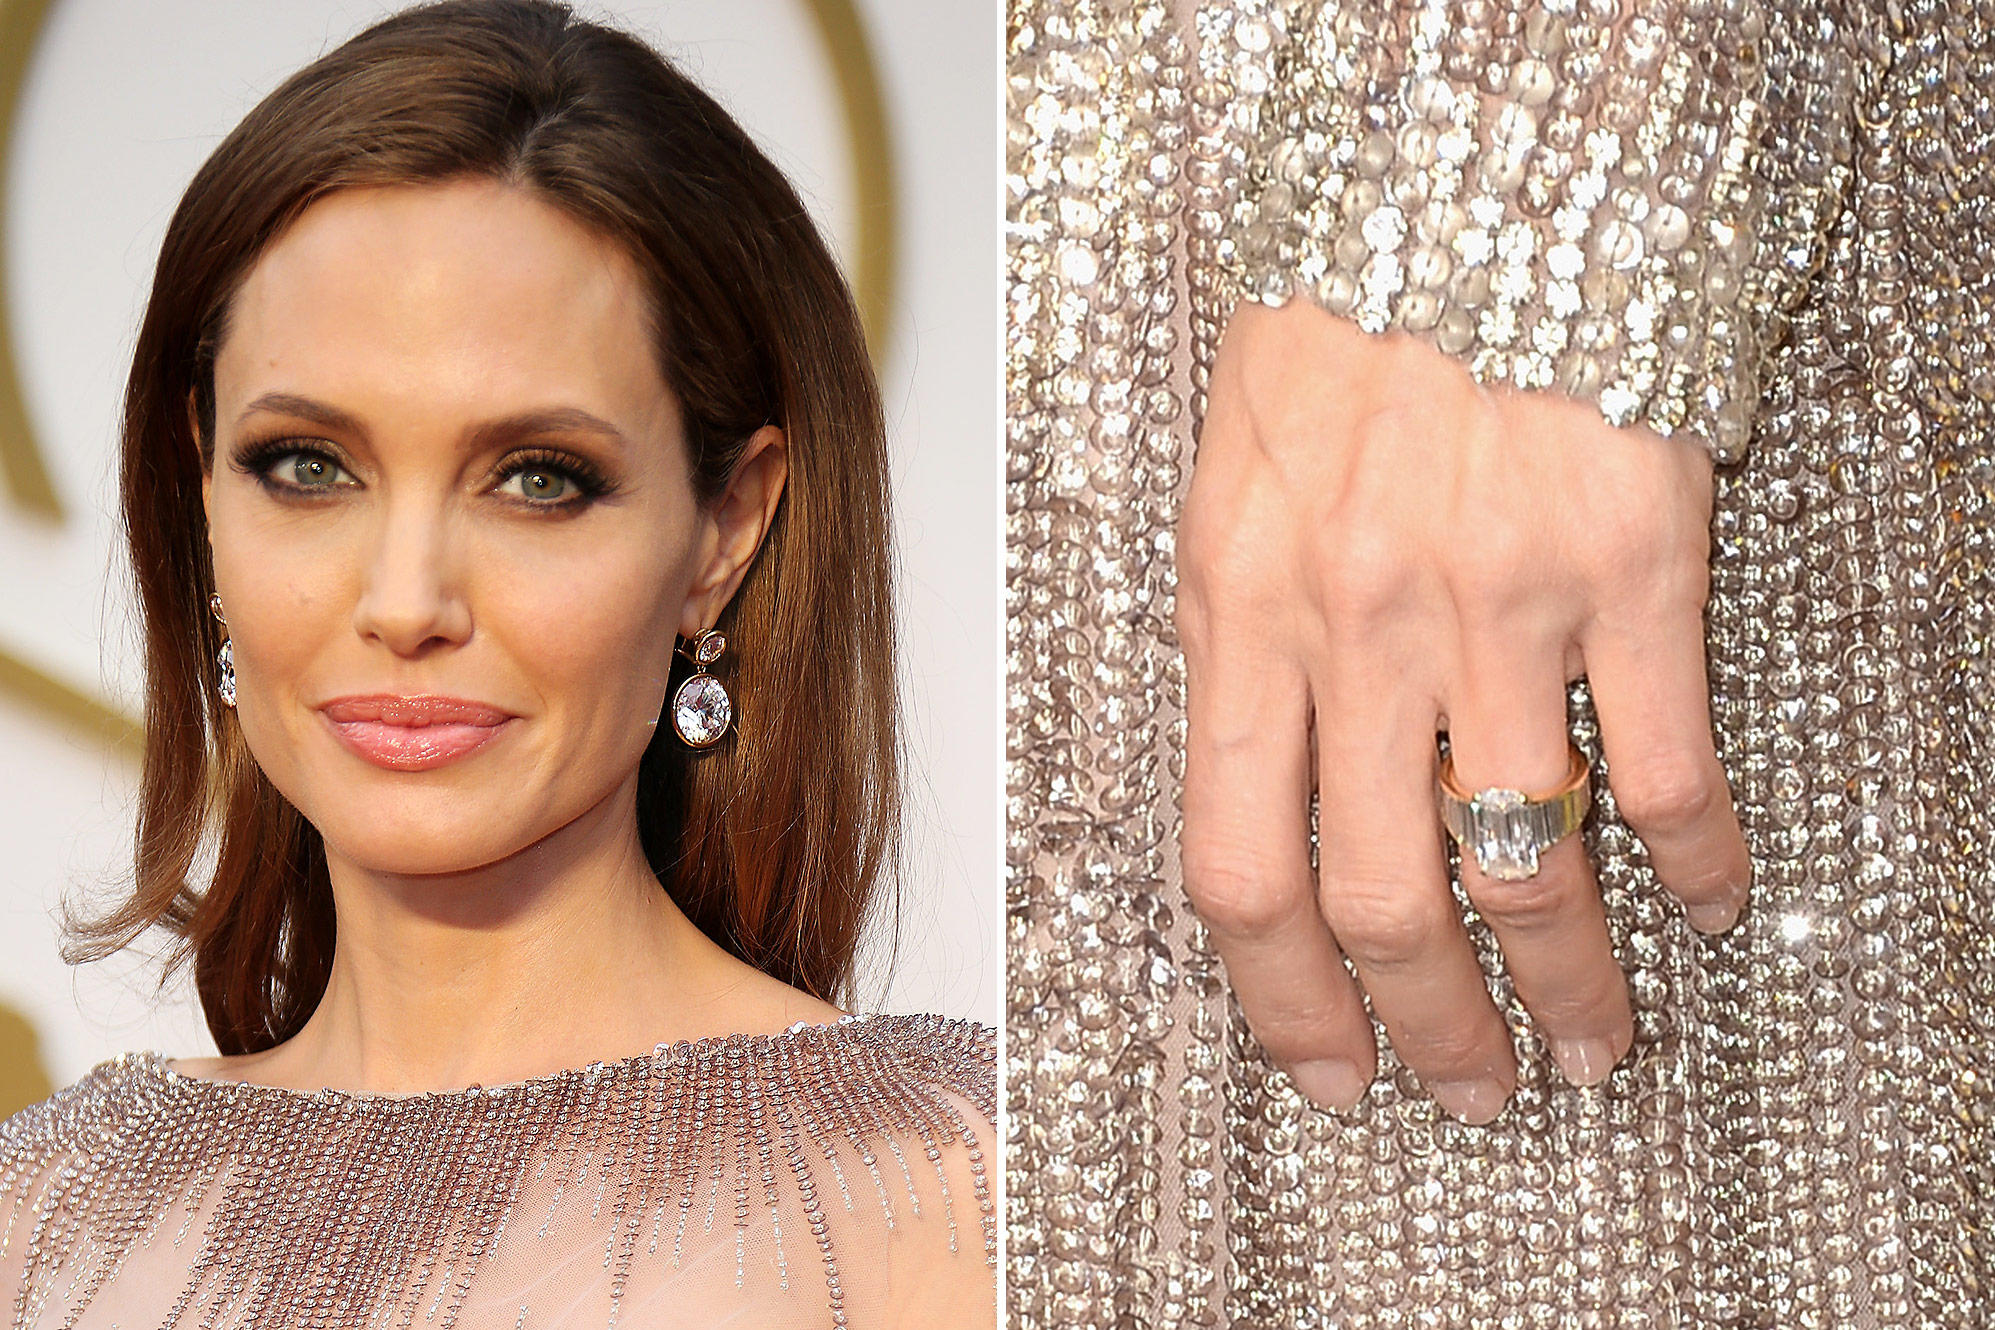 Celebrities Are Wearing CZ Jewelry